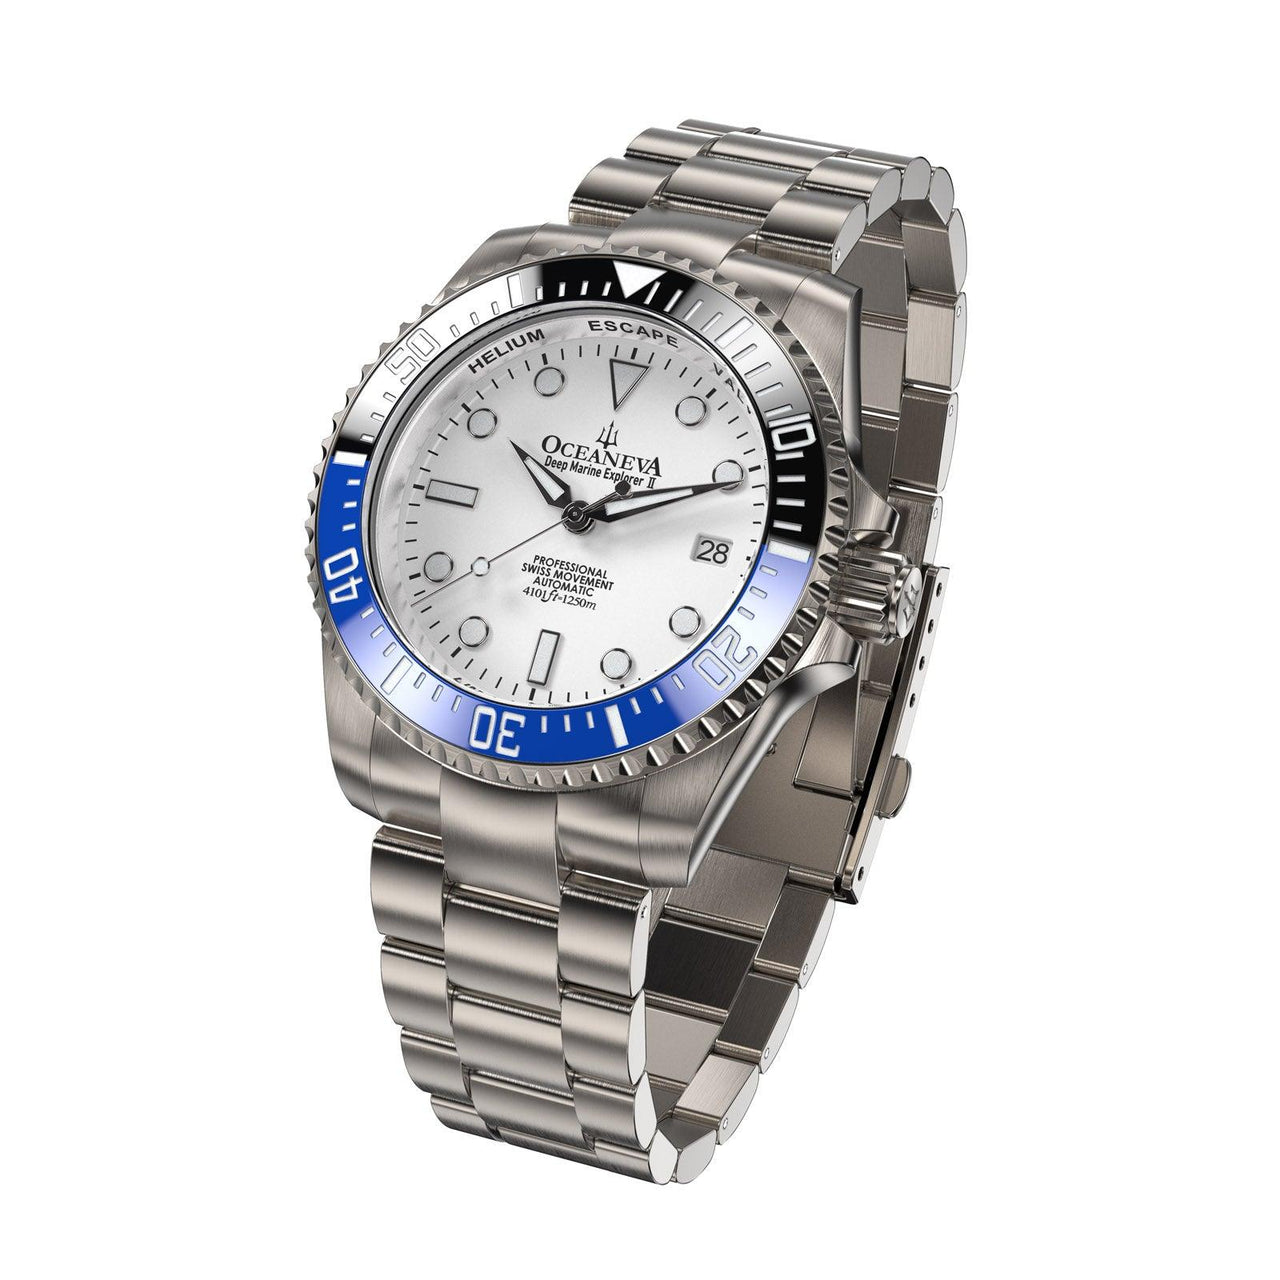 Oceaneva Deep Marine Explorer II Titanium Watch with White Dial - BLIIBK200WHTT Automatic watches, mens titanium watch, Titanium Watch, titanium watches for men, White dial Watch